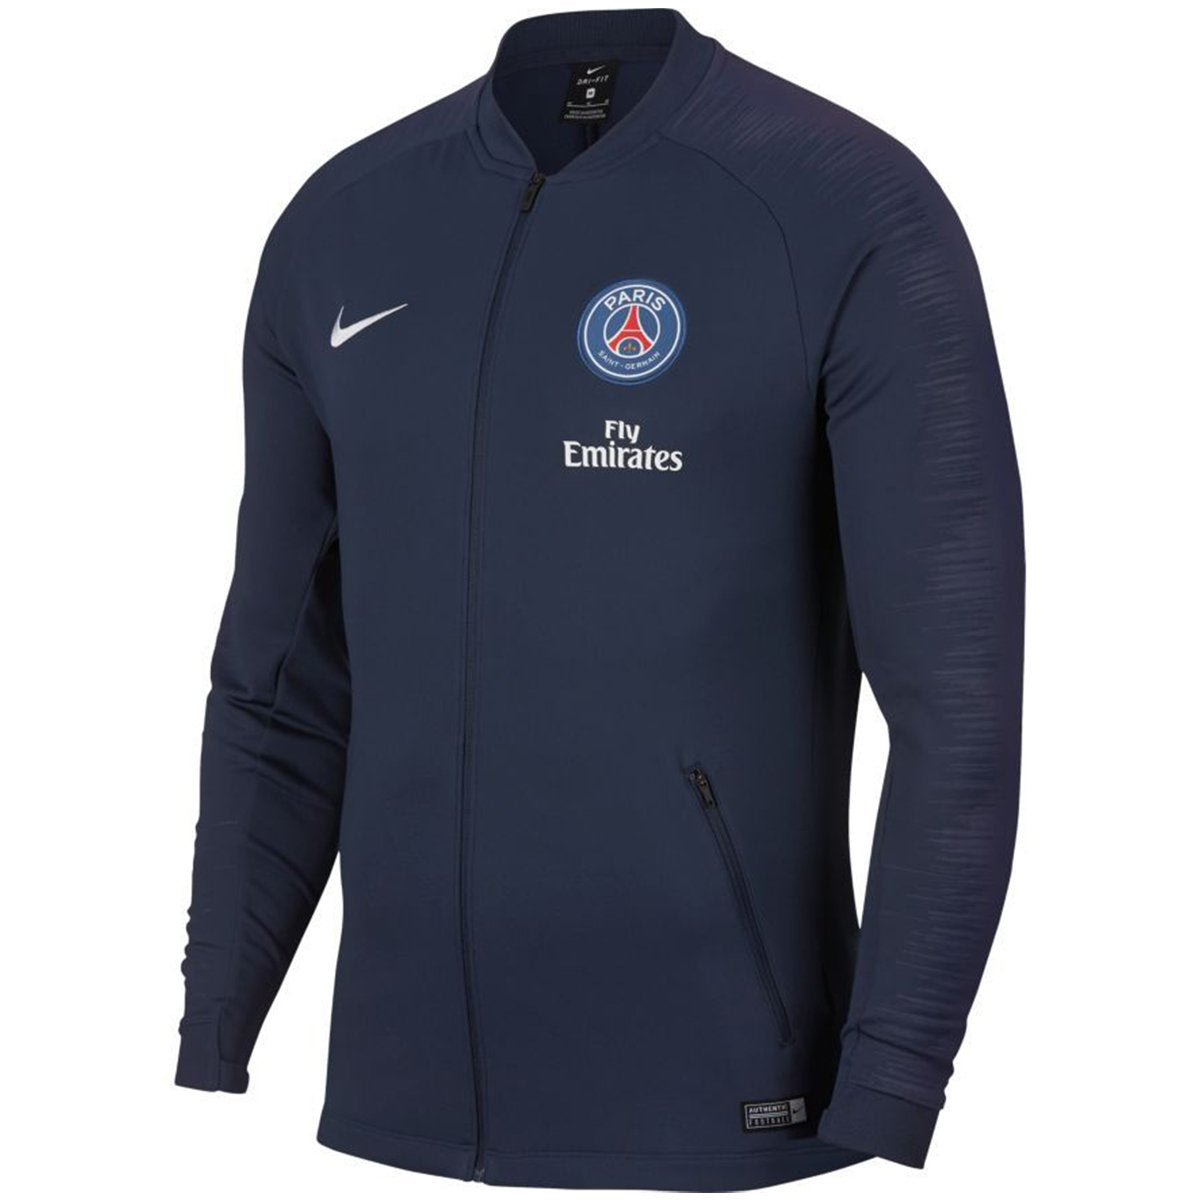 Nike Official 20182019 PSG Paris Saint Germain Anthem Jacket 8943654